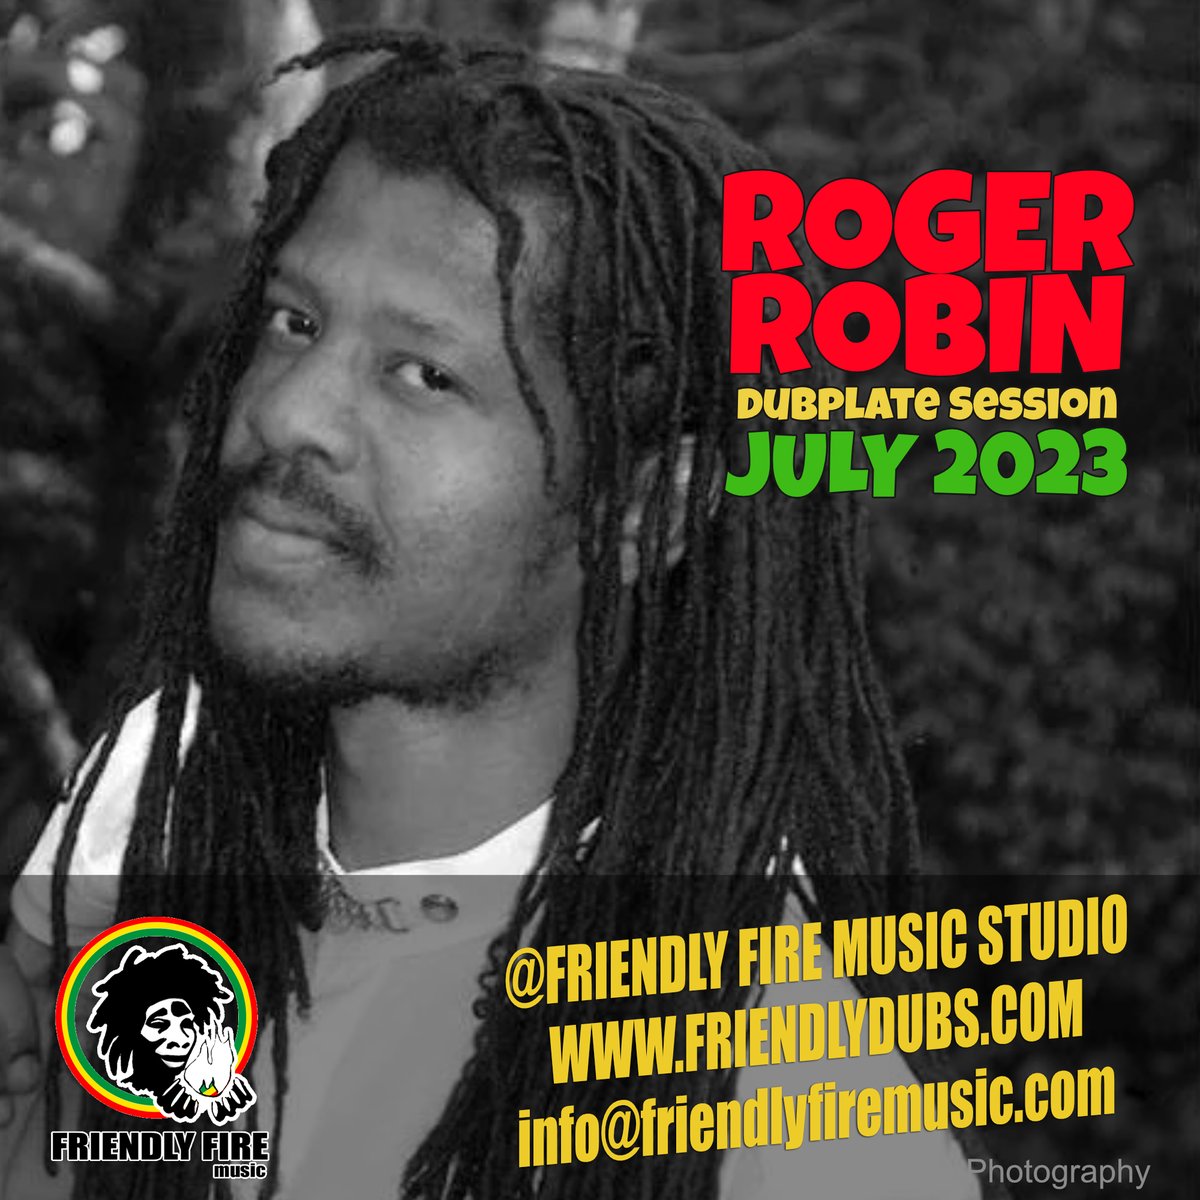 DUBSESSIONS:
 - Roger Robin
 - Raphael
 - Bonito Star
 - Queen Omega
 - King Imxge
#dubplates #friendlydubs #ukdublink #soundsystem friendlydubs.com